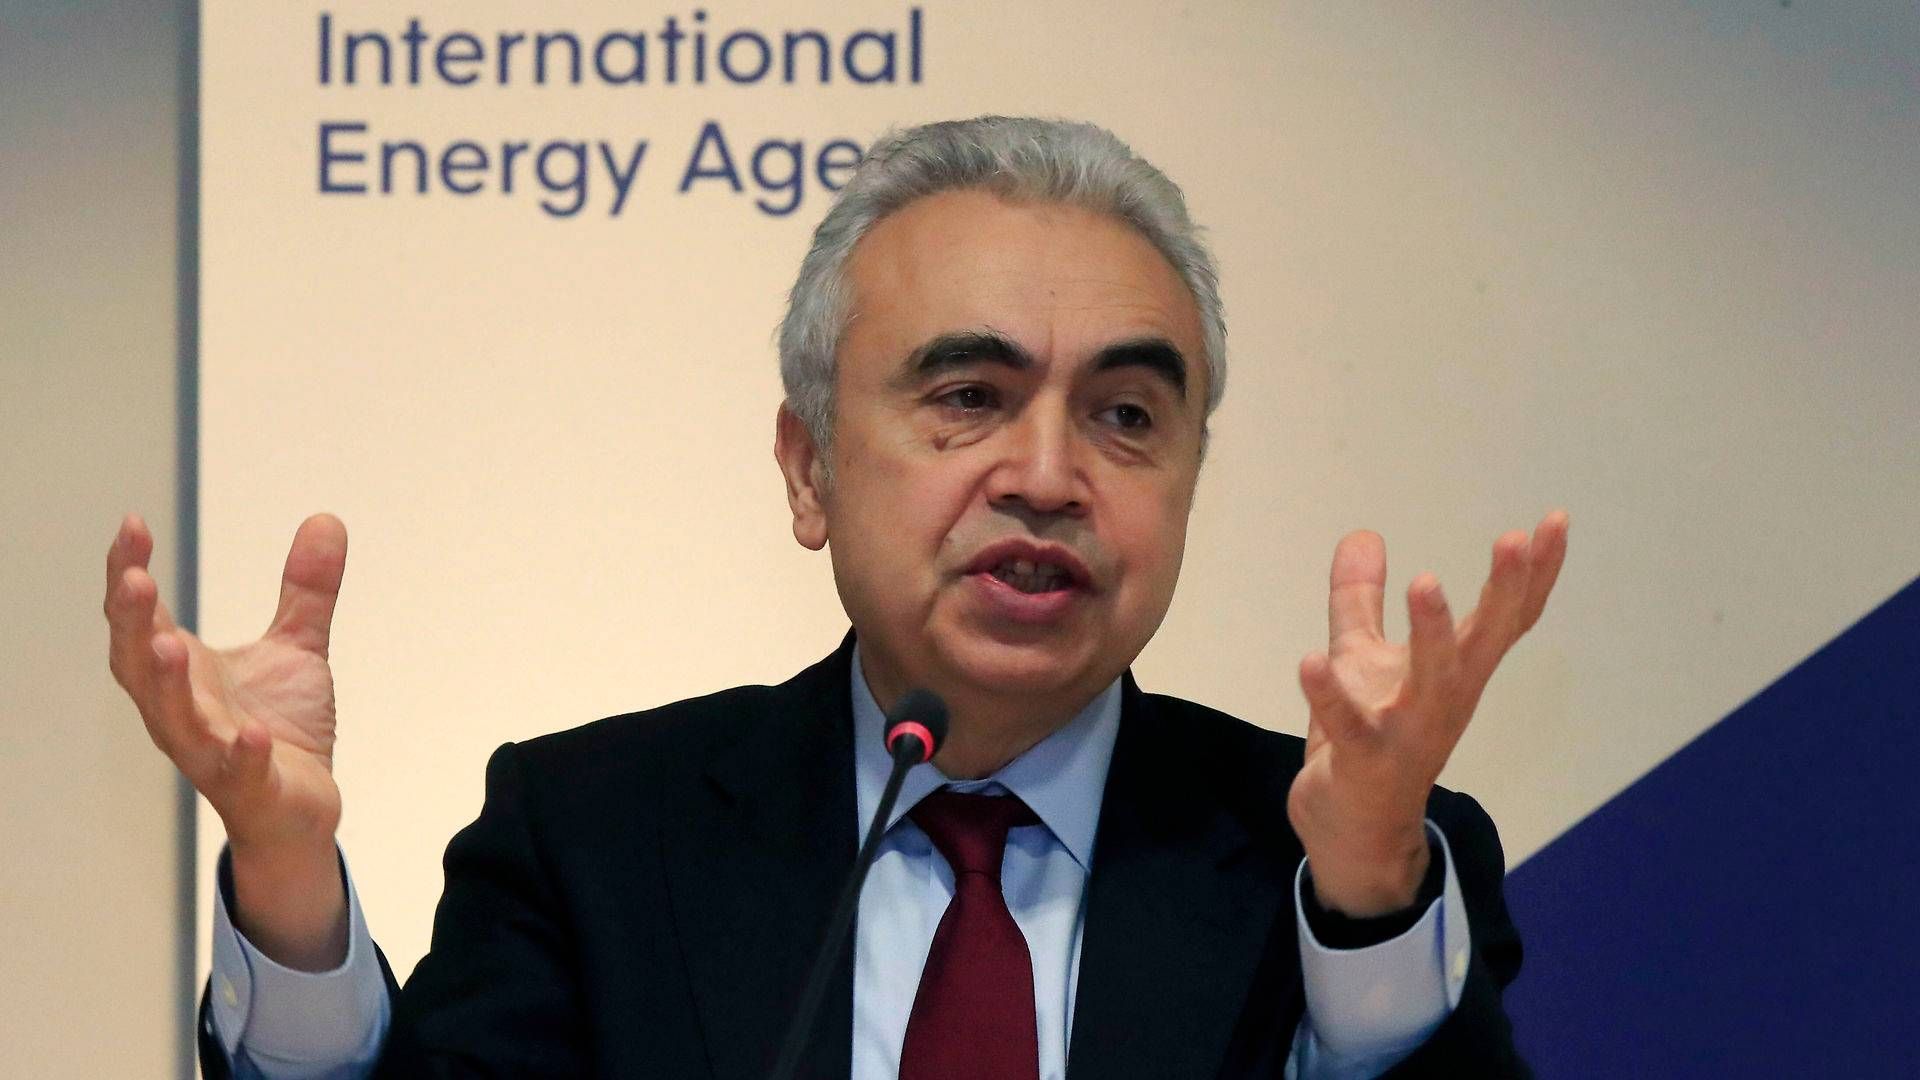 Fatih Birol, the IEA's executive director, sees opportunities amid the global energy crisis. | Photo: Michel Euler/AP/Ritzau Scanpix